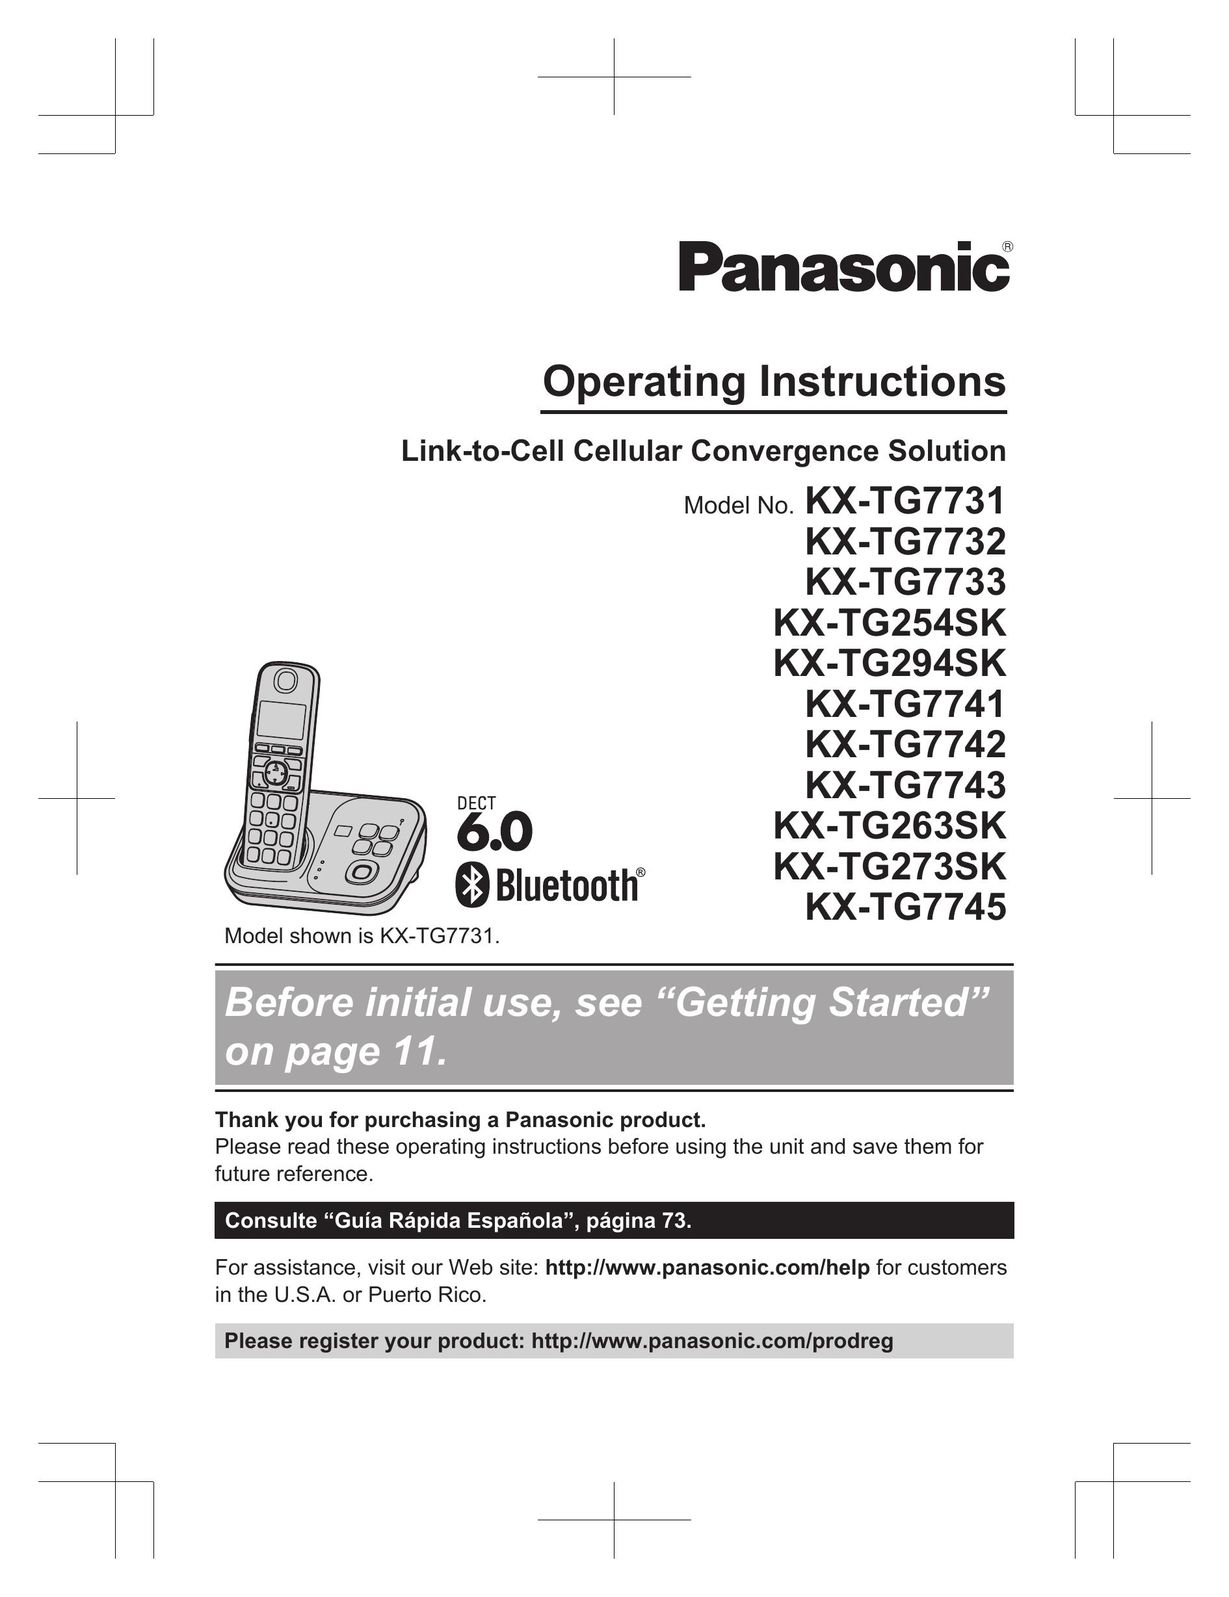 Panasonic KX-TG263SK Carrying Case User Manual